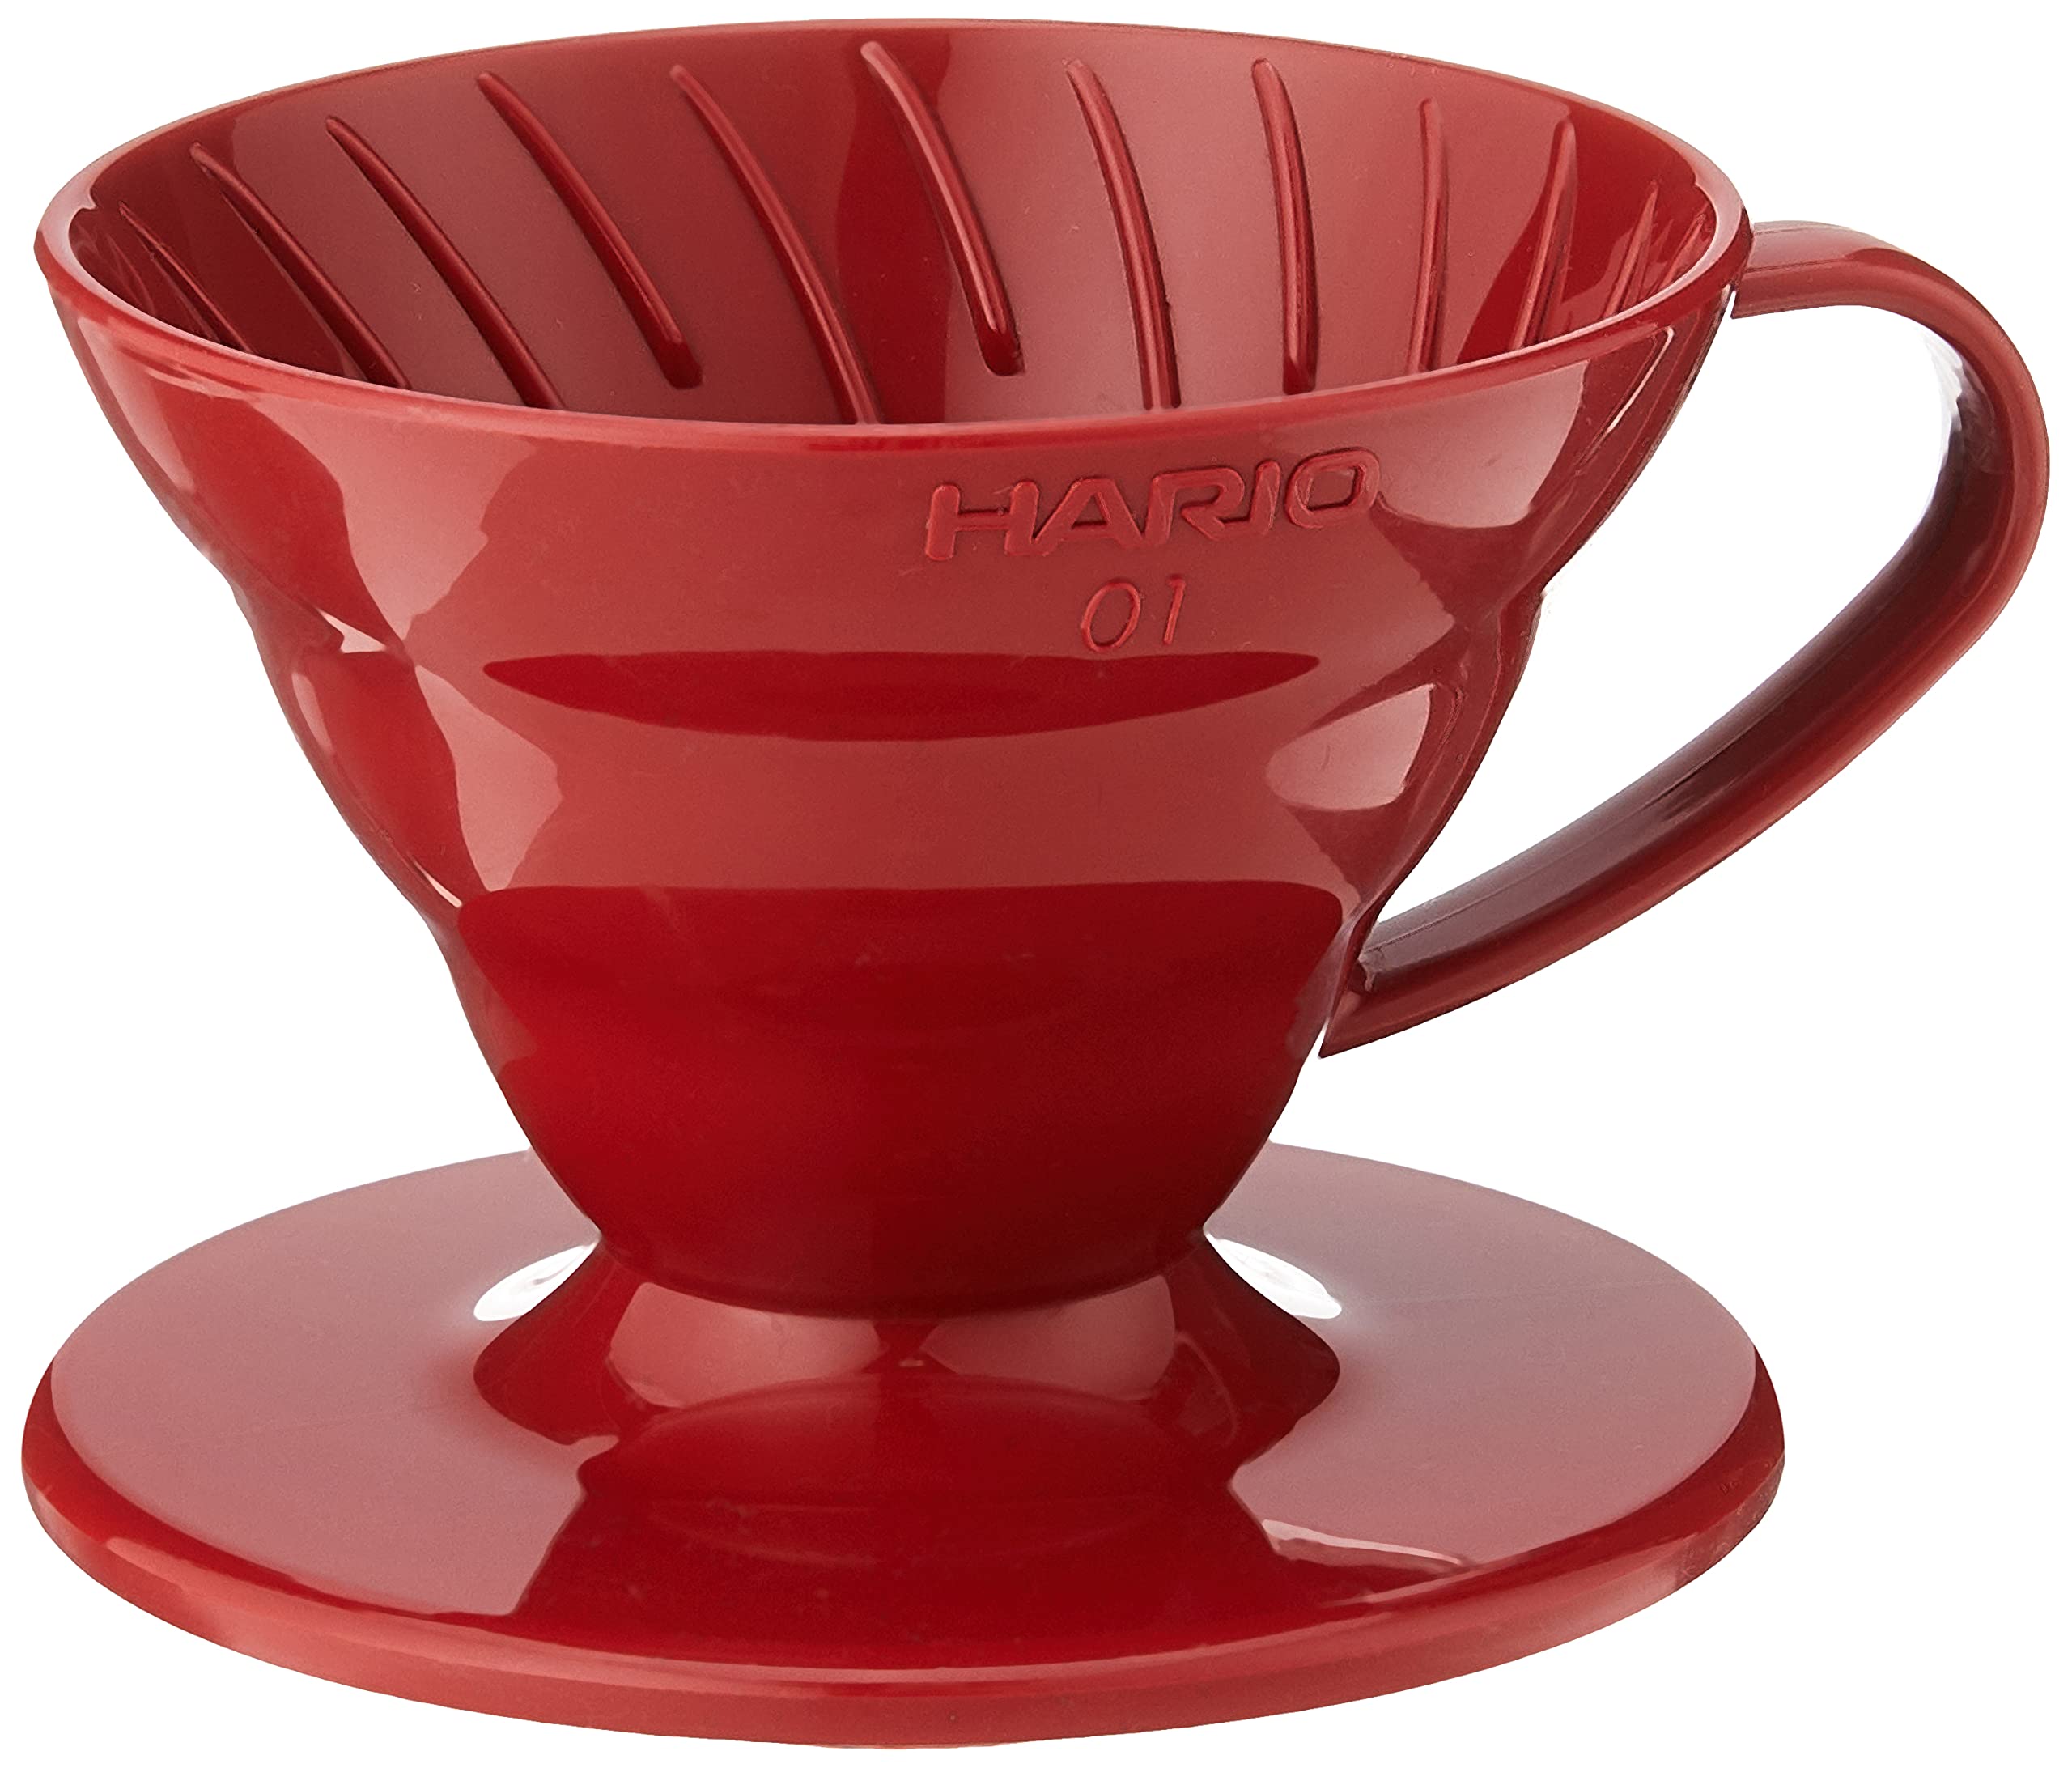 Phễu lọc cà phê V60 sứ đỏ | 1-2 cups (size 01)1-2 cups (size 01) và 3-4 cups (size 02)